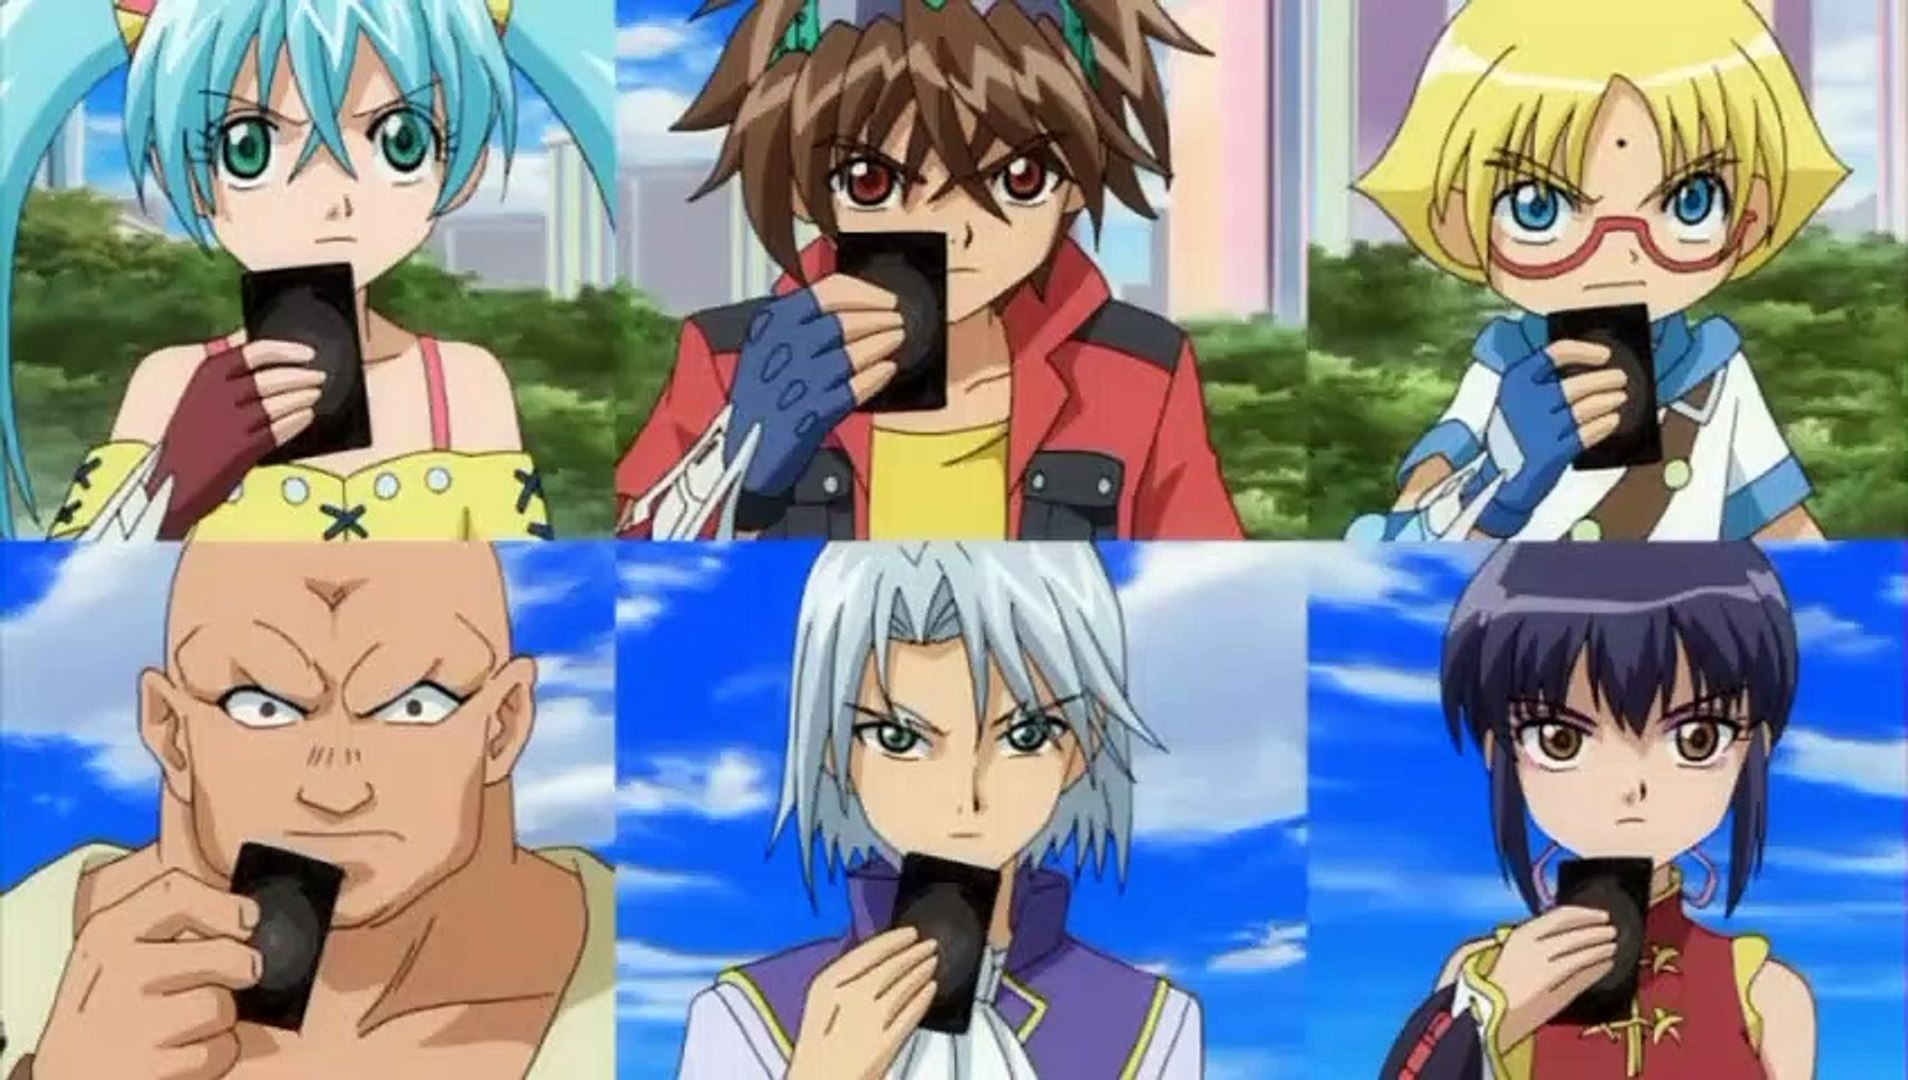 Characters appearing in Bakugan Battle Brawlers Anime